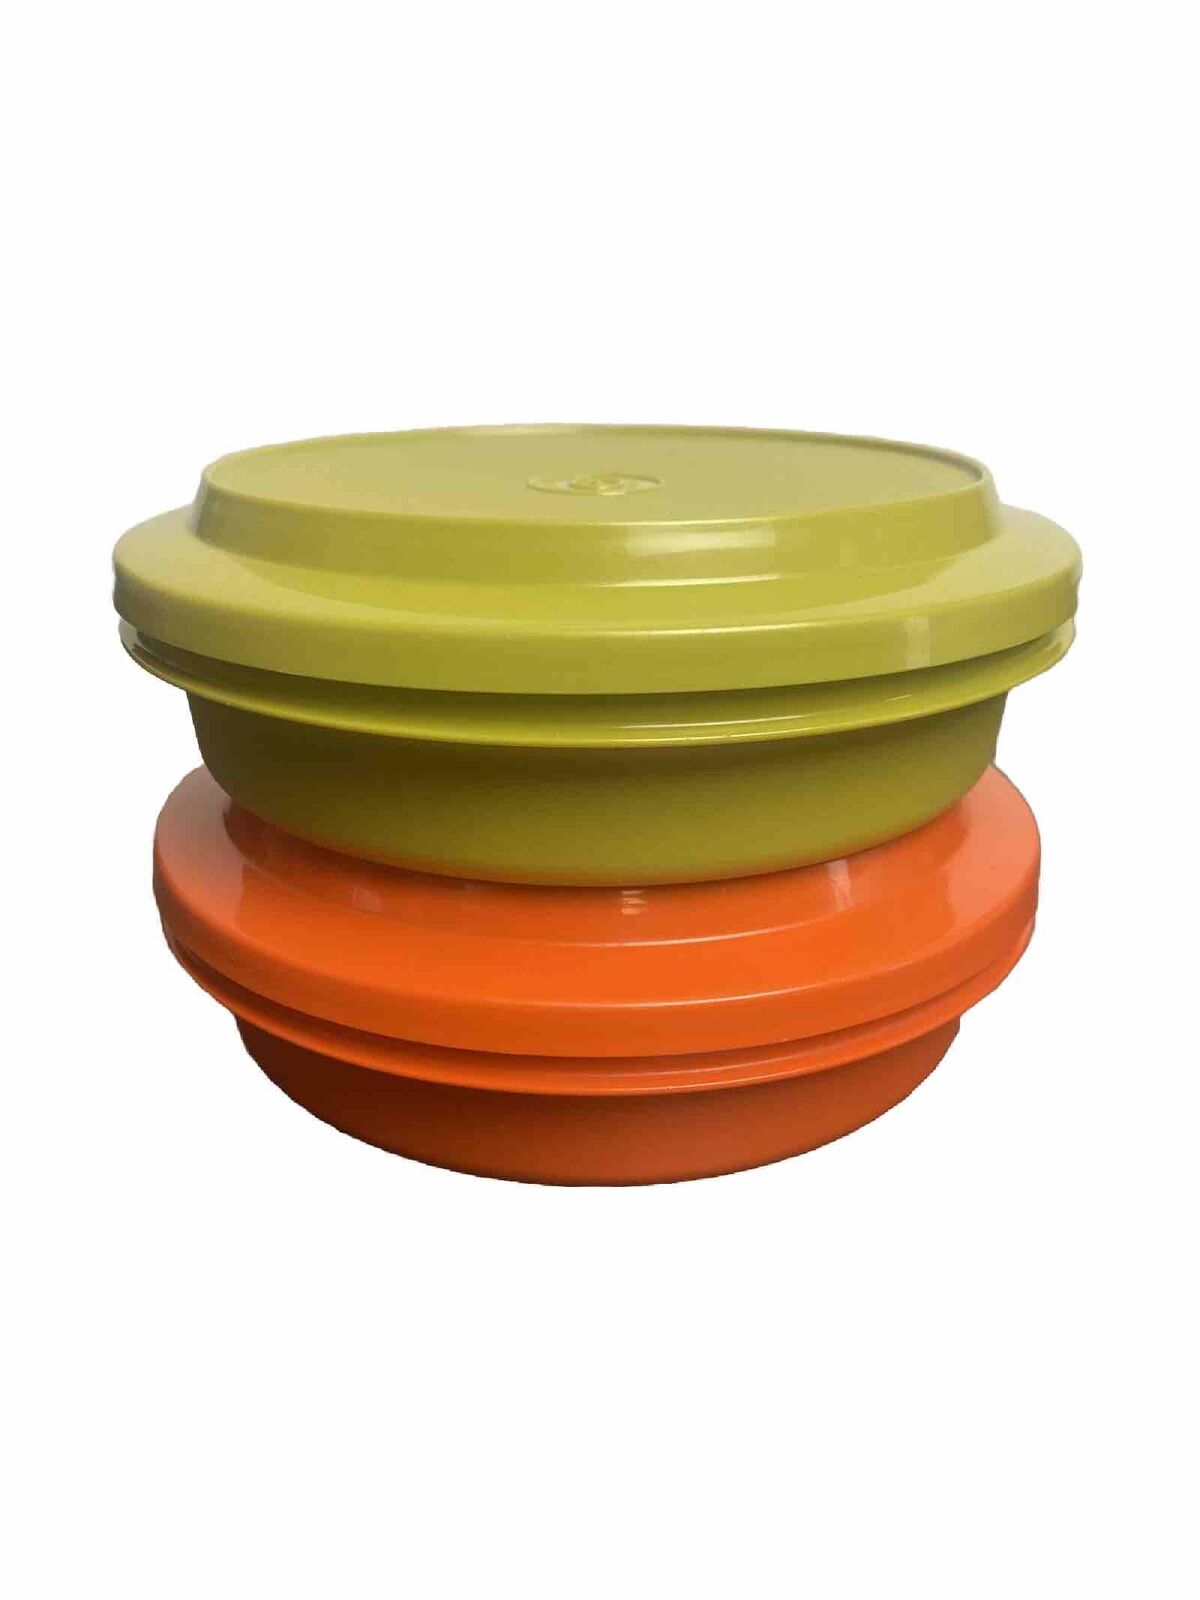 2 Tupperware Seal N Serve Bowls Vintage Harvest Colors  w/Lids #1207 Lot